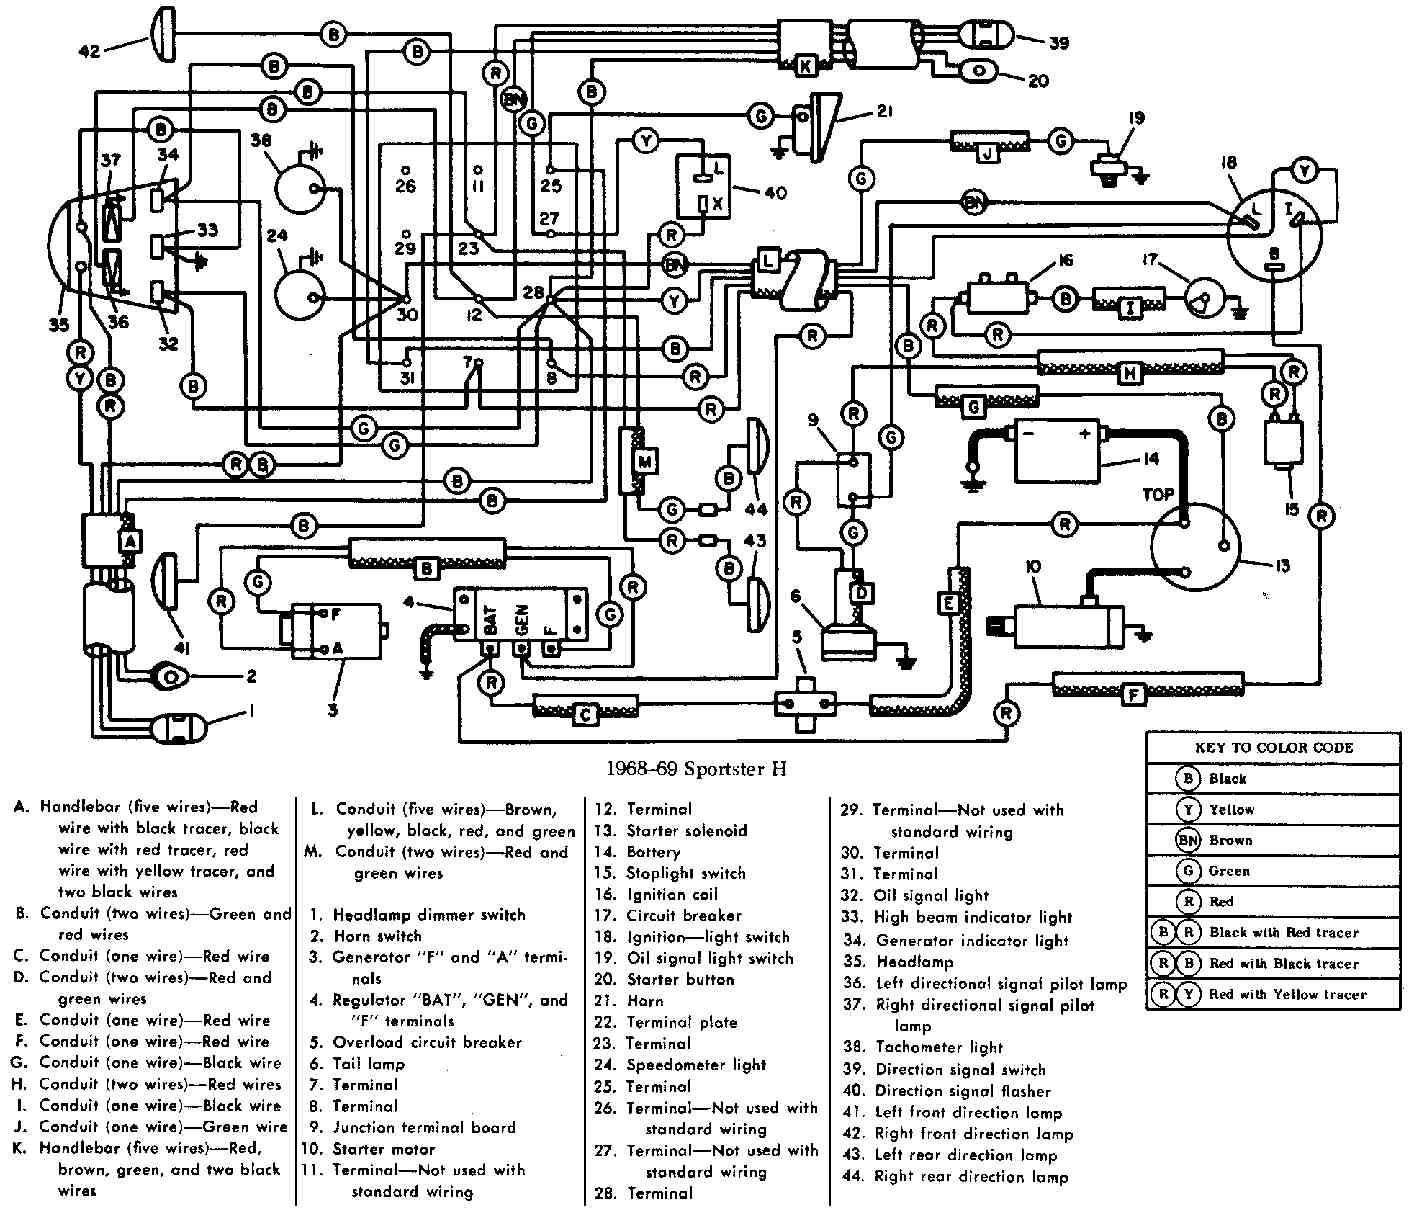 Harley Davidson - Motorcycles Manual PDF, Wiring Diagram & Fault Codes